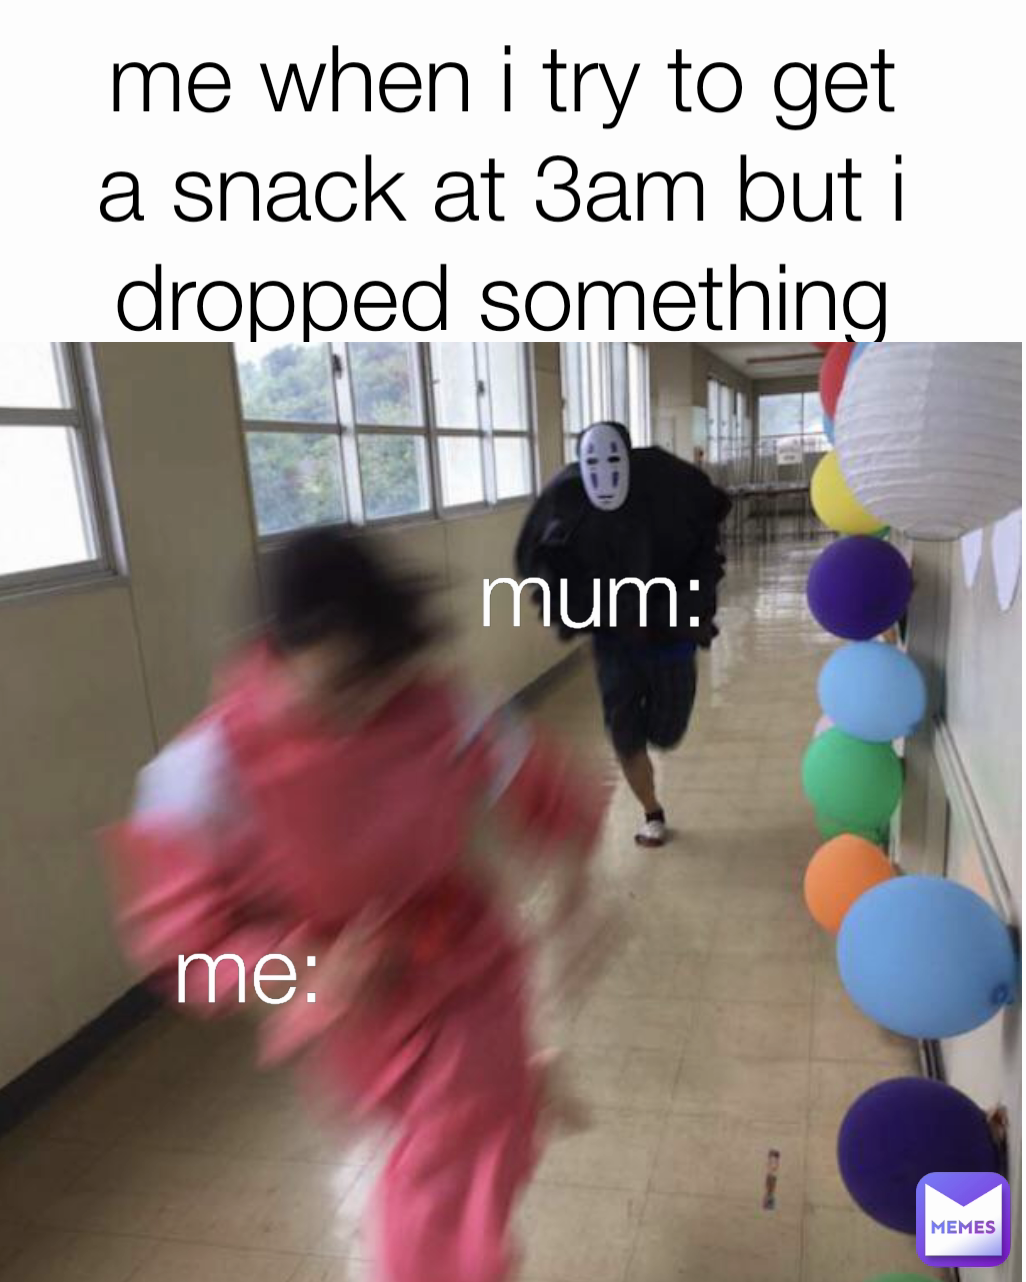 mum: me: me when i try to get a snack at 3am but i dropped something